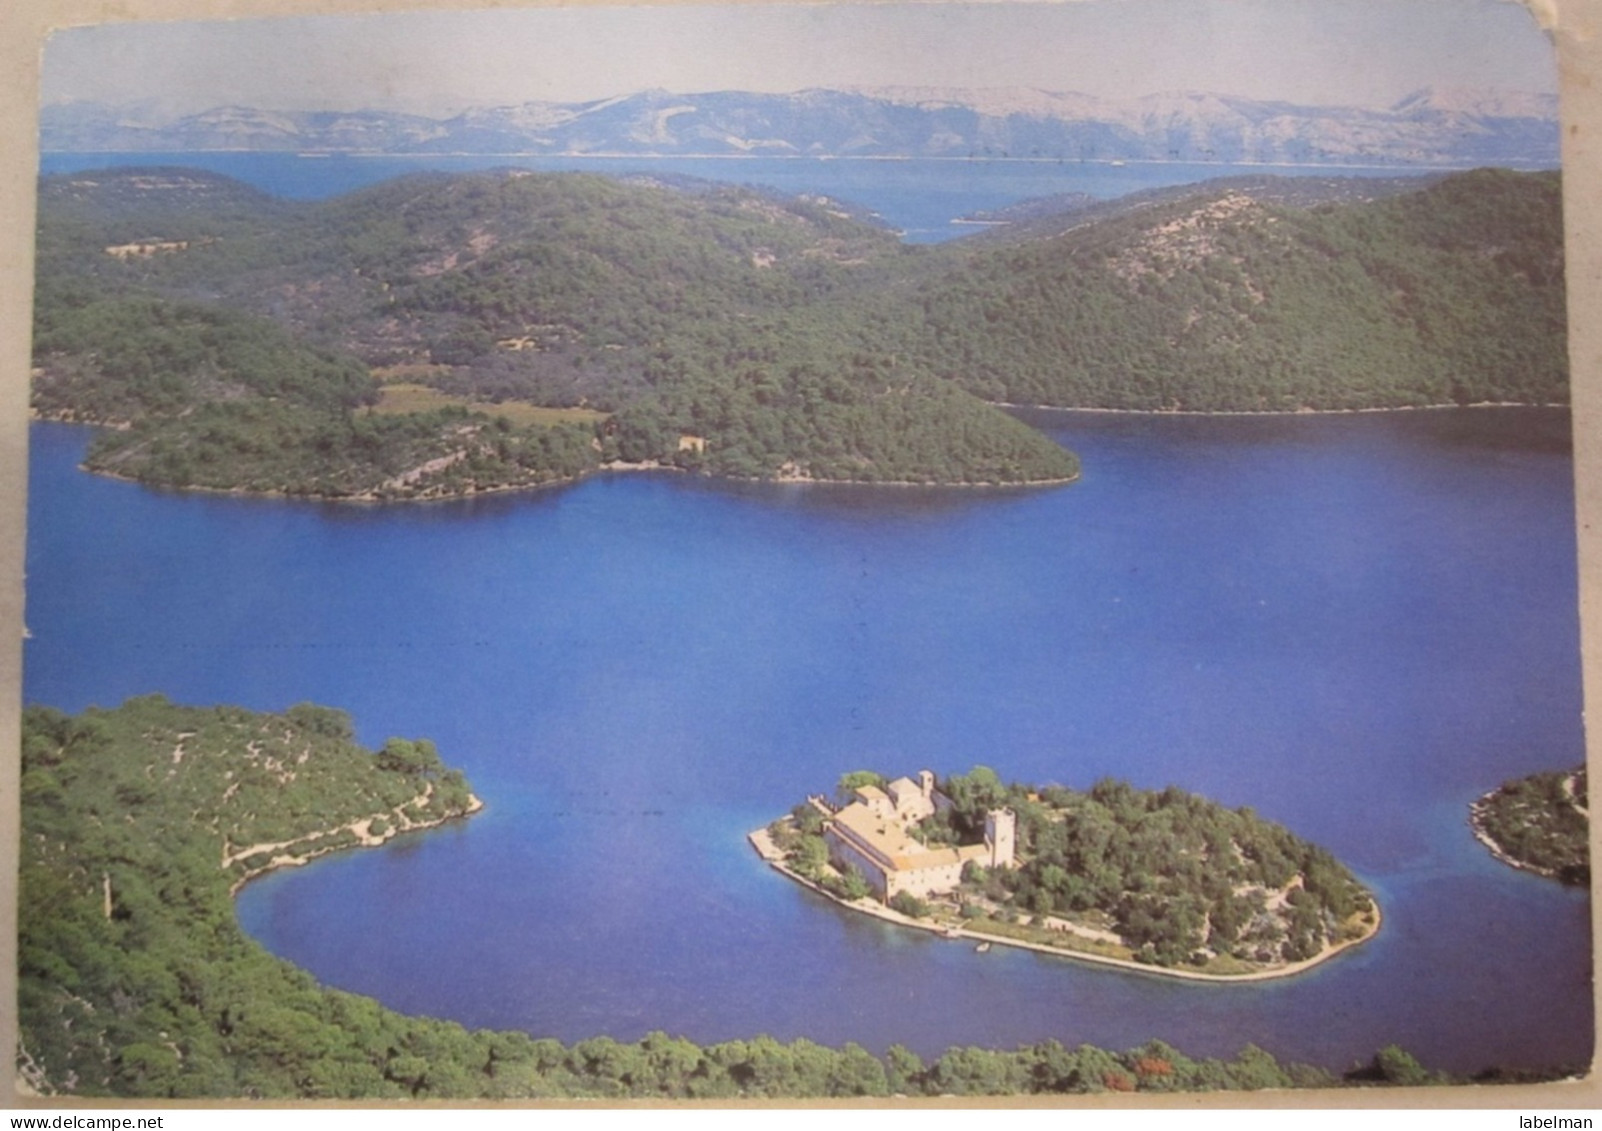 HOTEL PENSION GUEST HOUSE ISLAND LAKE MONASTERY MLJET GOVEDJARI JUGOSLAVIA POST CARD PC STAMP TOURISM - Bosnia And Herzegovina